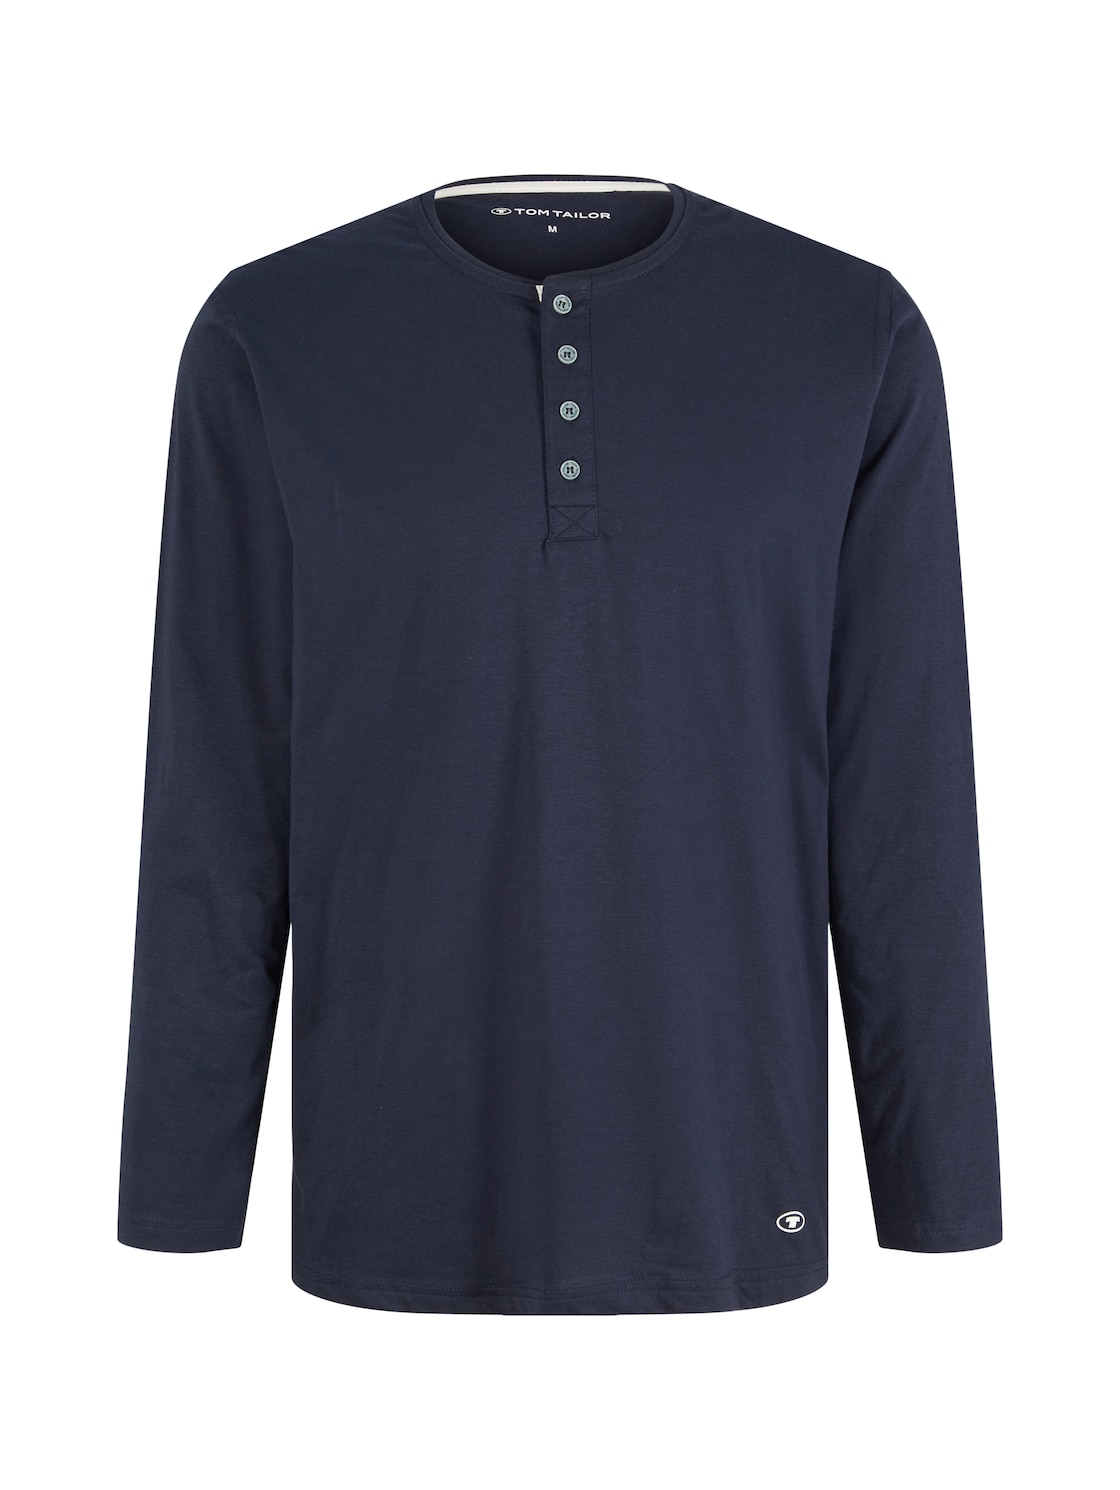 TOM TAILOR Herren Pyjama Langarmshirt, blau, Logo Print, Gr. 54/XL von Tom Tailor